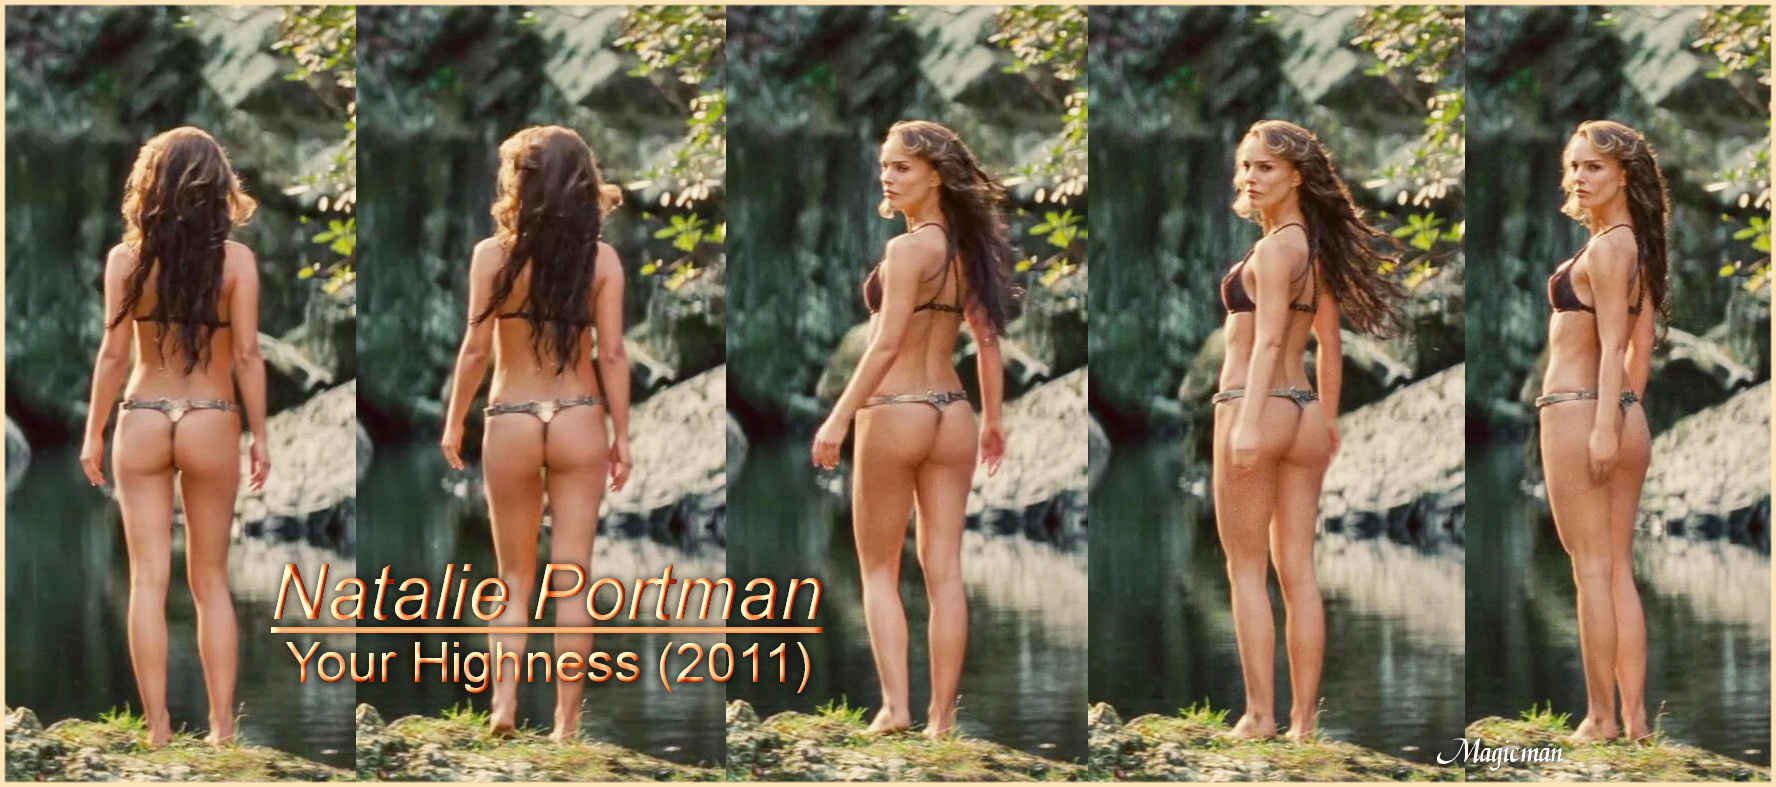 CelebrityBottoms-NataliePortman-YourHighness-hd1080.jpg